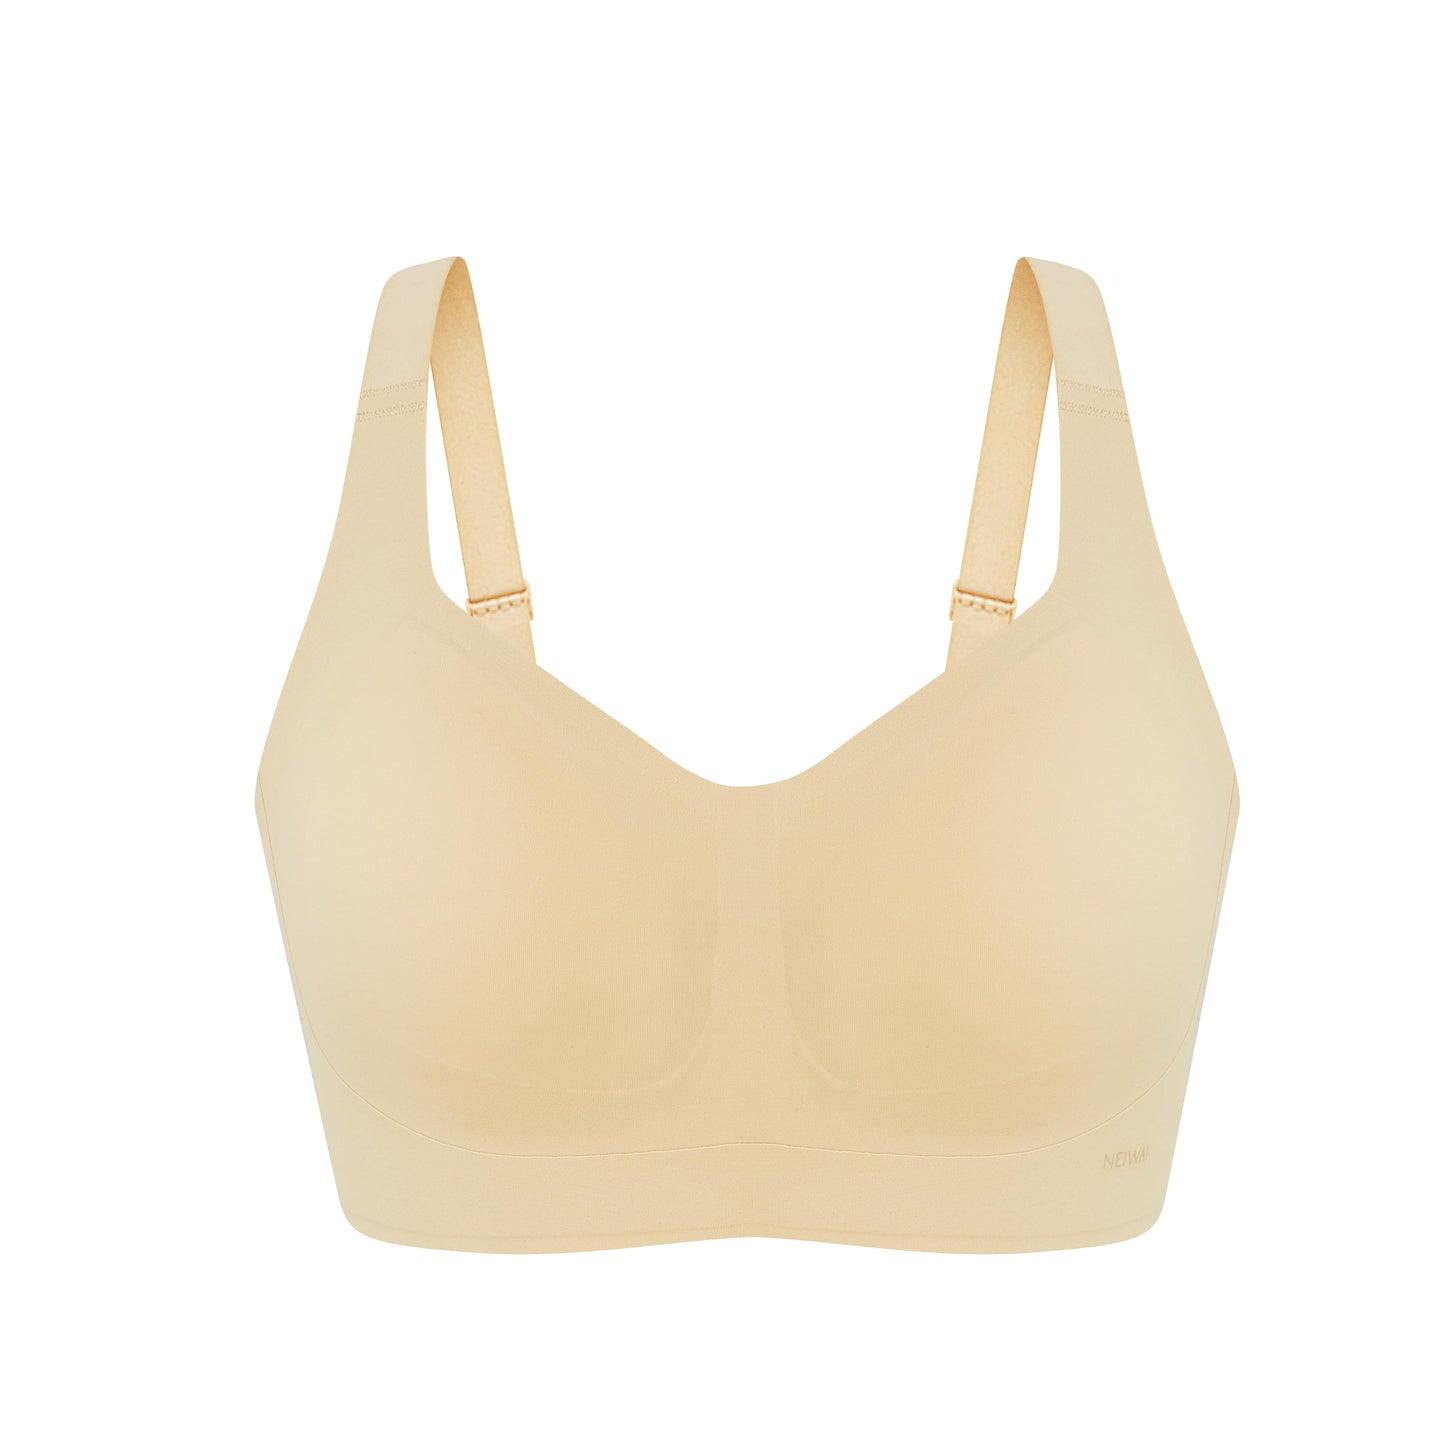 image of a light yellow bra